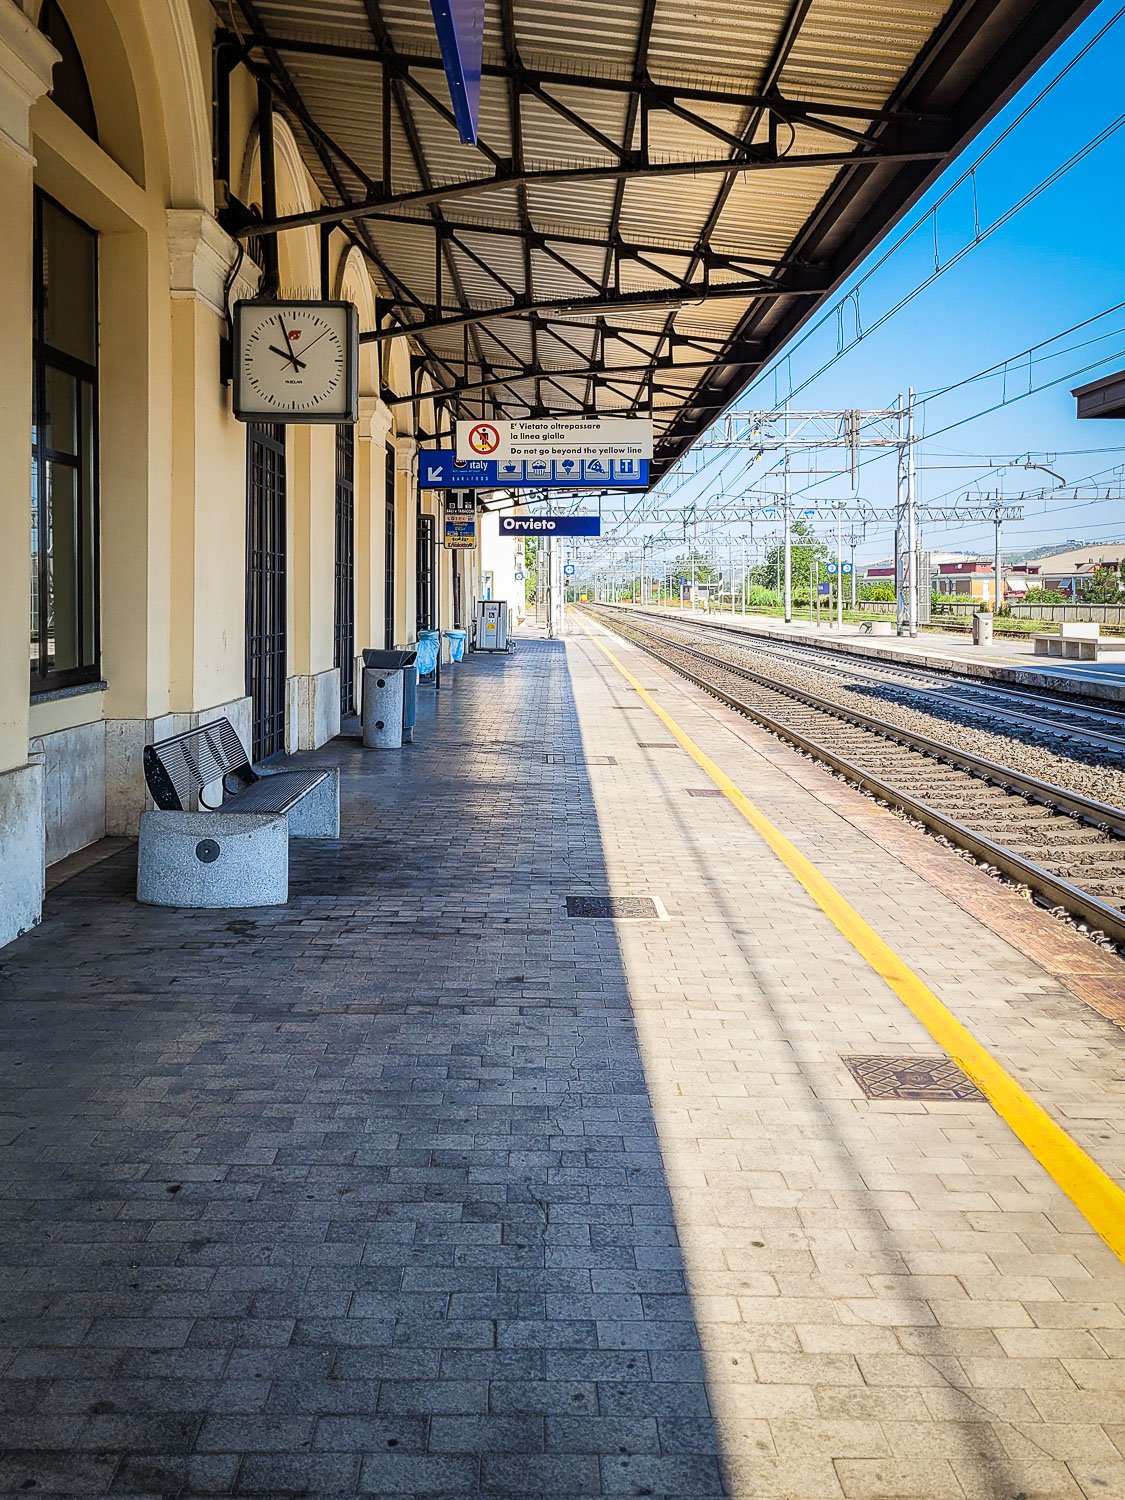 Rome to Orvieto day trip - Train Station